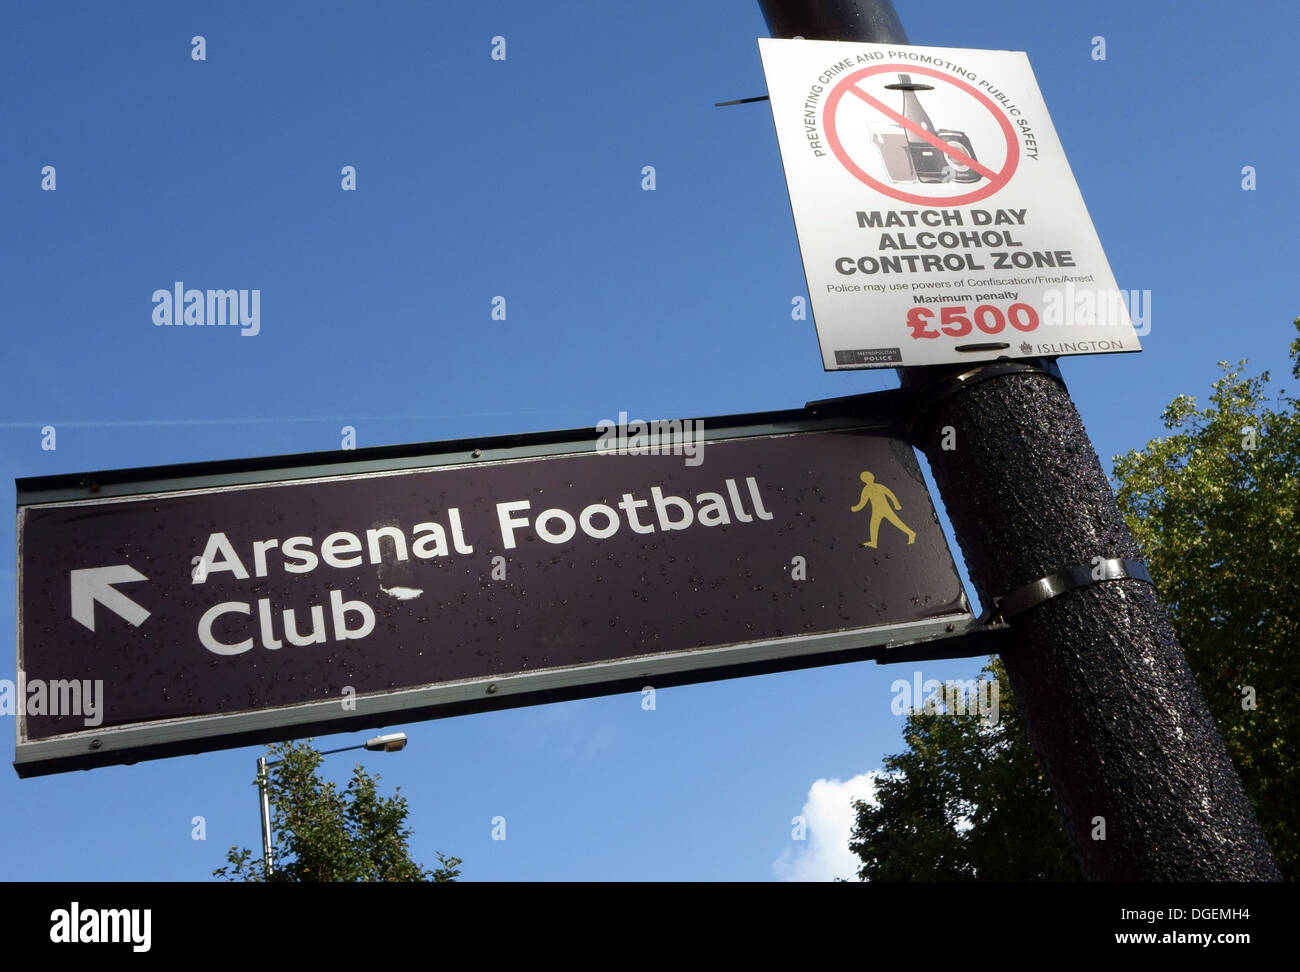 Zona de control jornada alcohol firmar cerca de arsenal F.C. Emirates Stadium, Londres Foto de stock